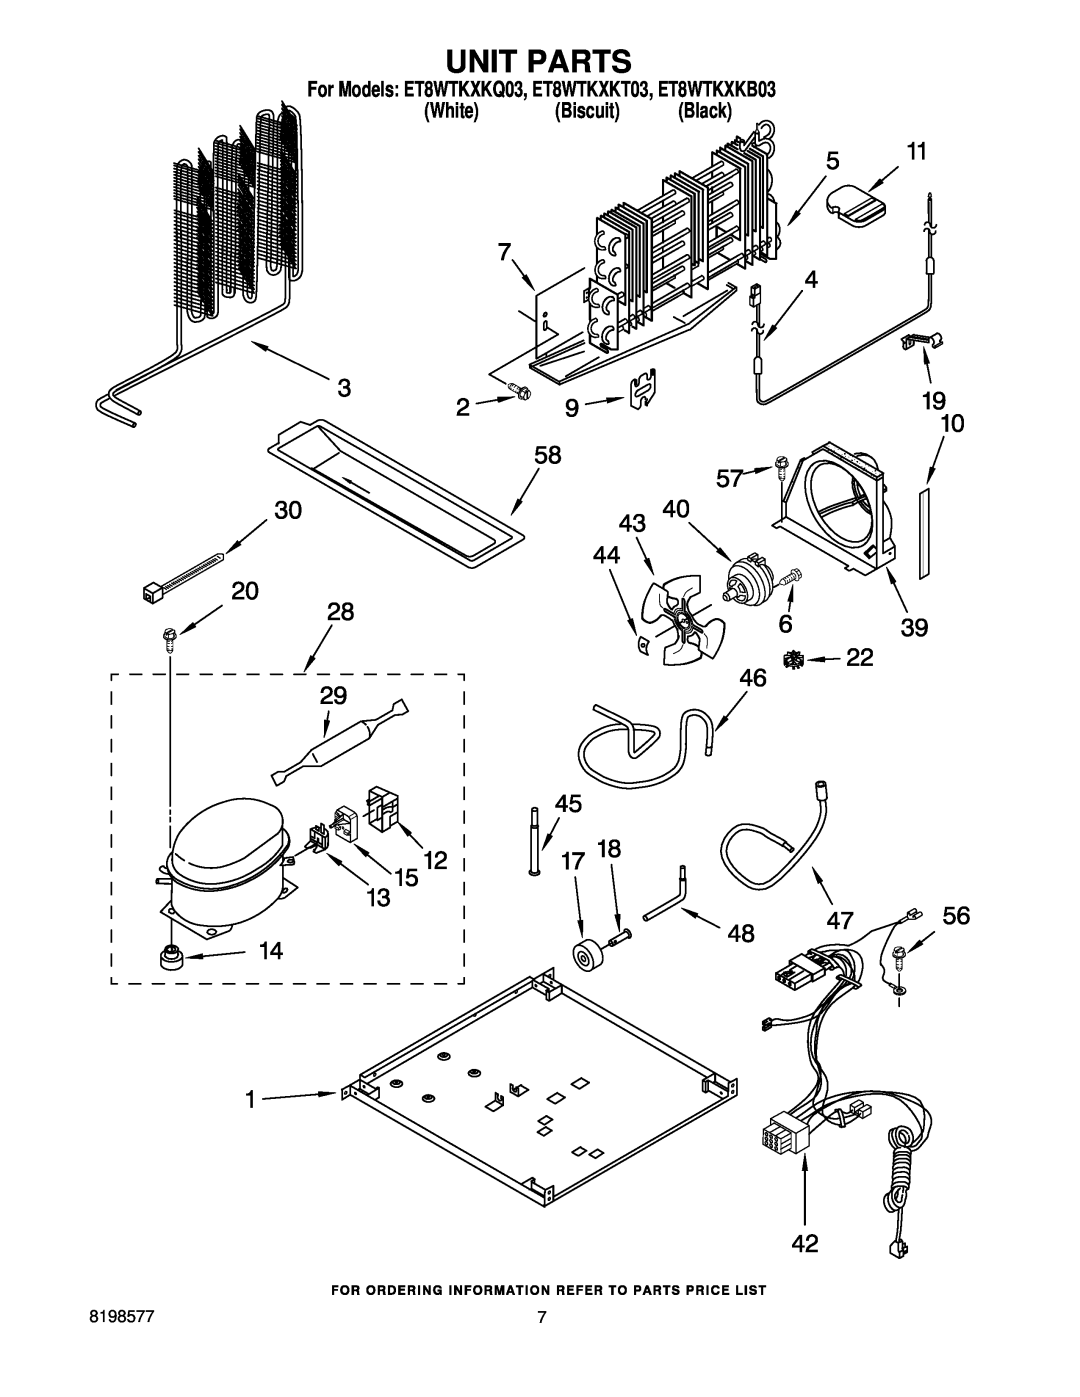 Whirlpool manual Unit Parts, For Models ET8WTKXKQ03, ET8WTKXKT03, ET8WTKXKB03, White Biscuit Black 